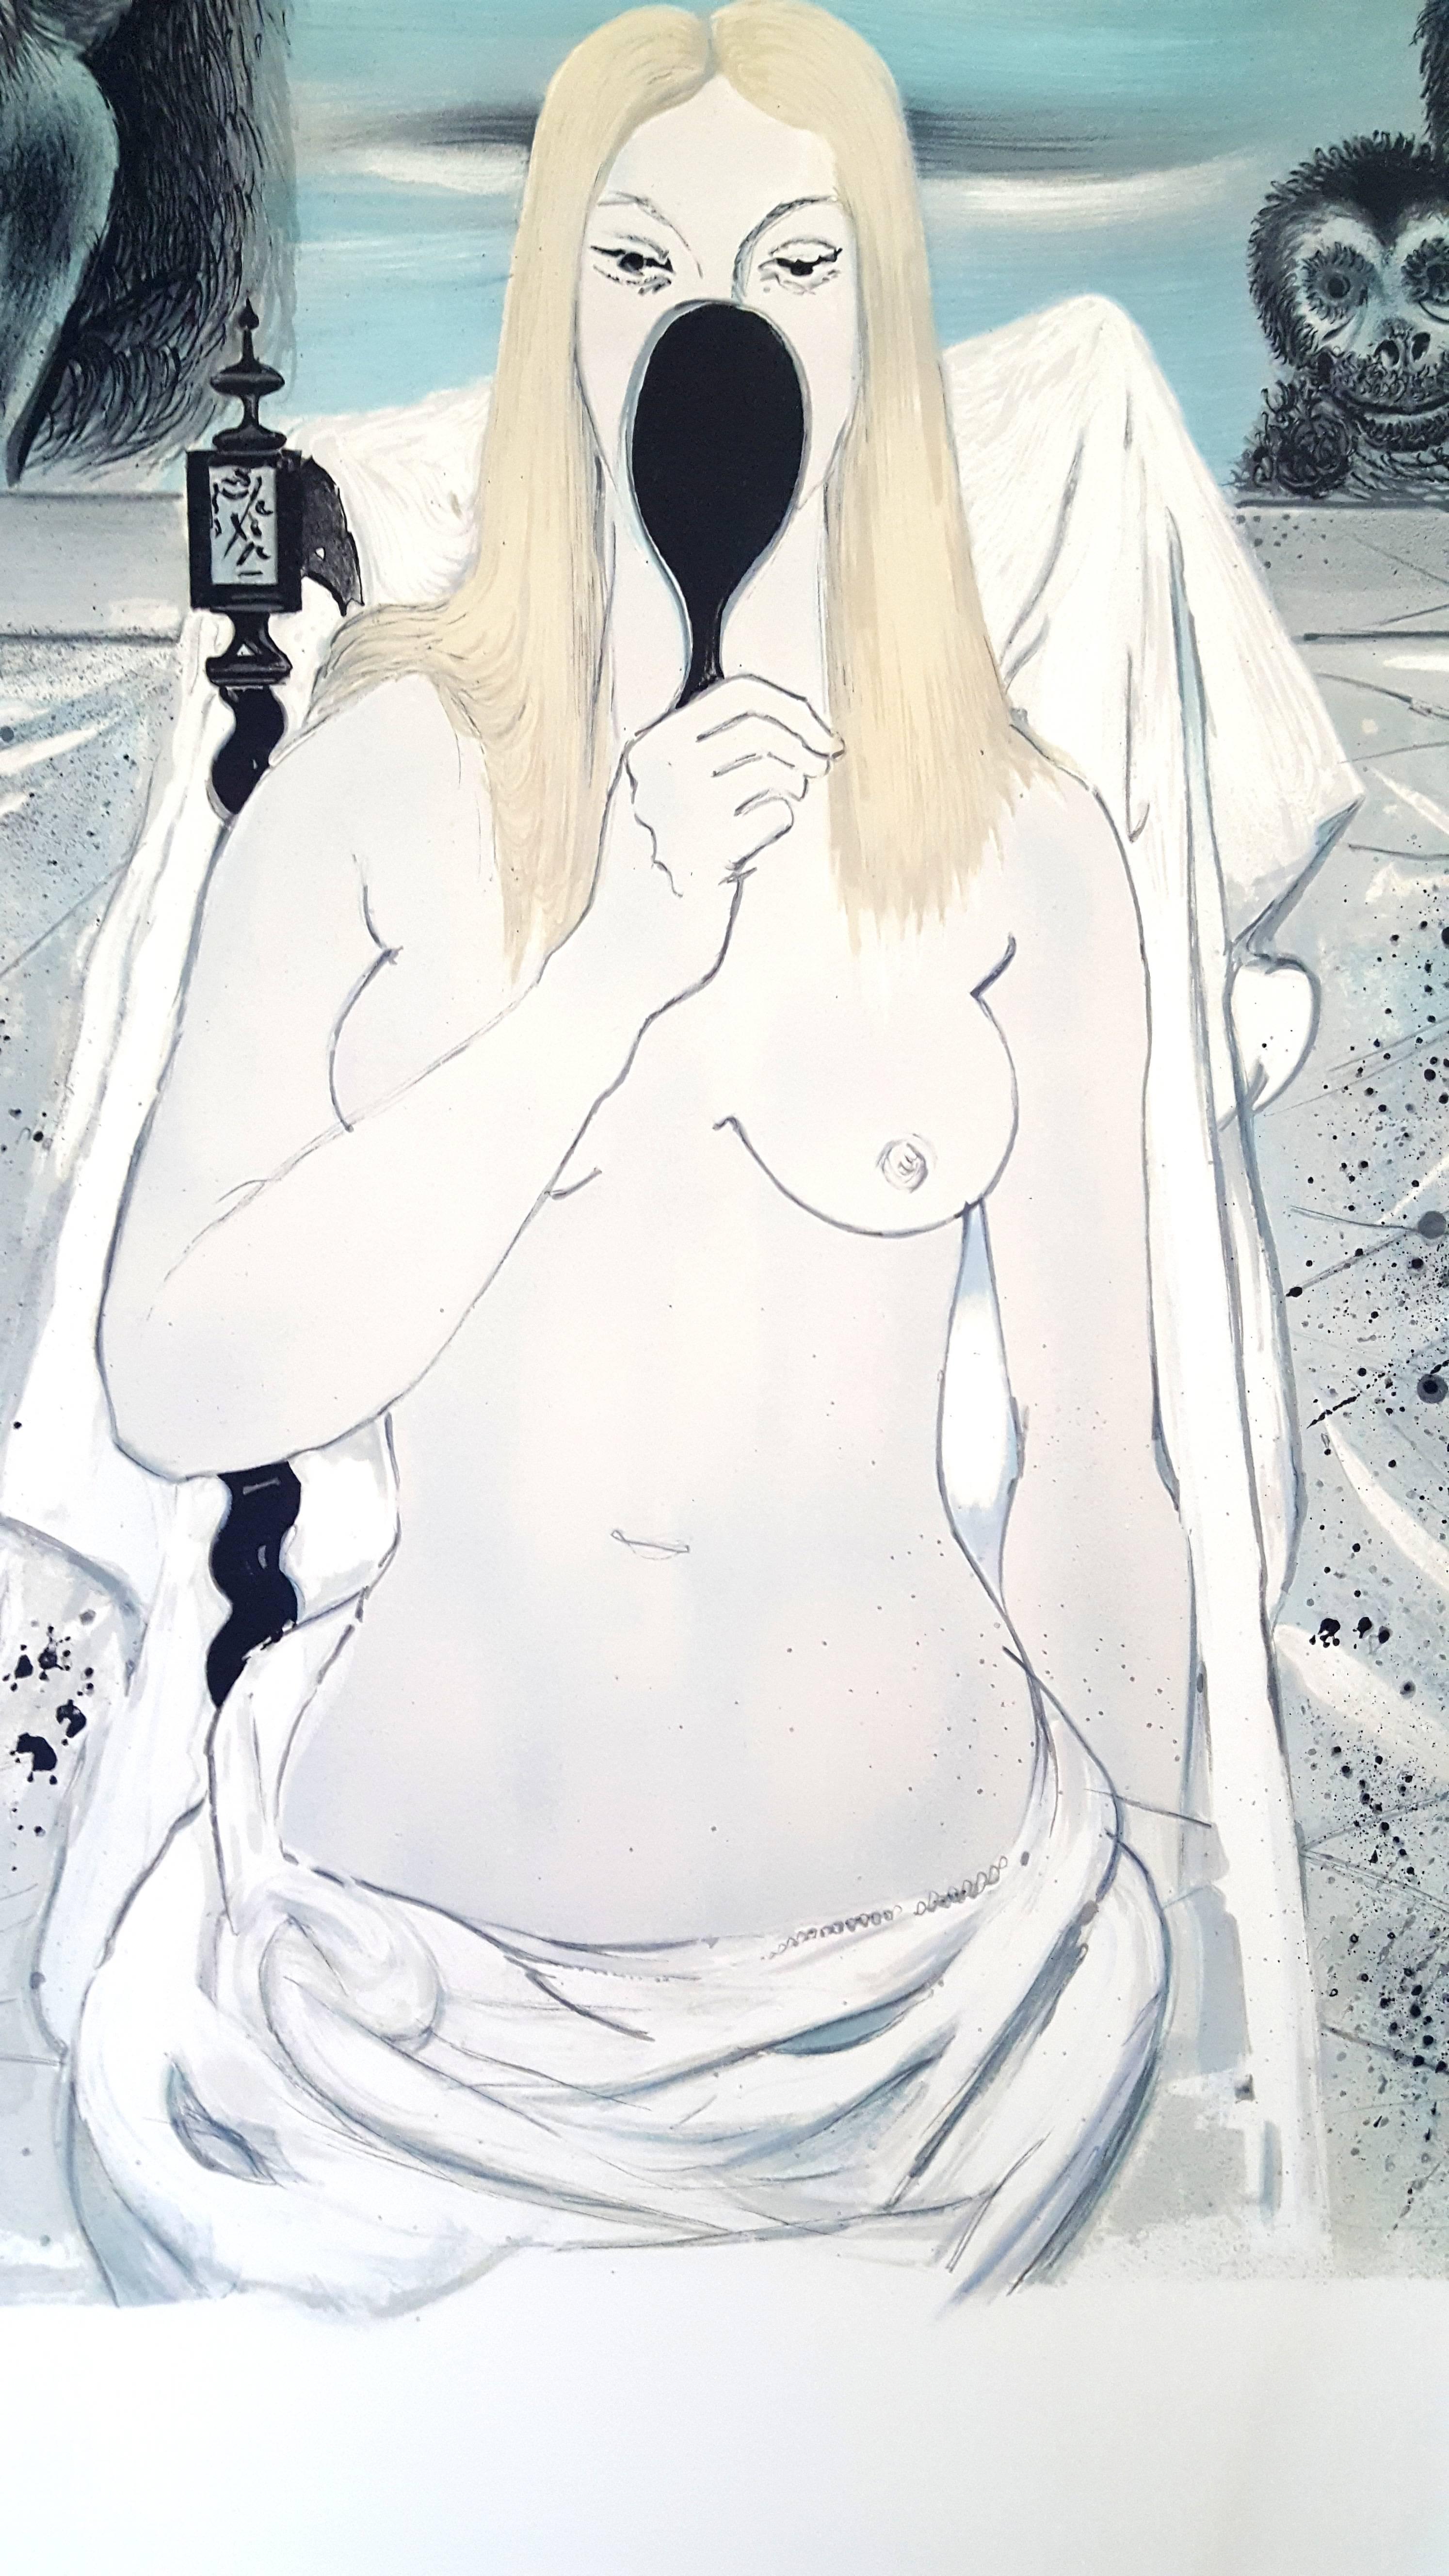 Roger Chapelain-Midy - Original Handsigned Lithograph - Ecole de Paris - Gray Nude Print by Roger Chapelain Midy